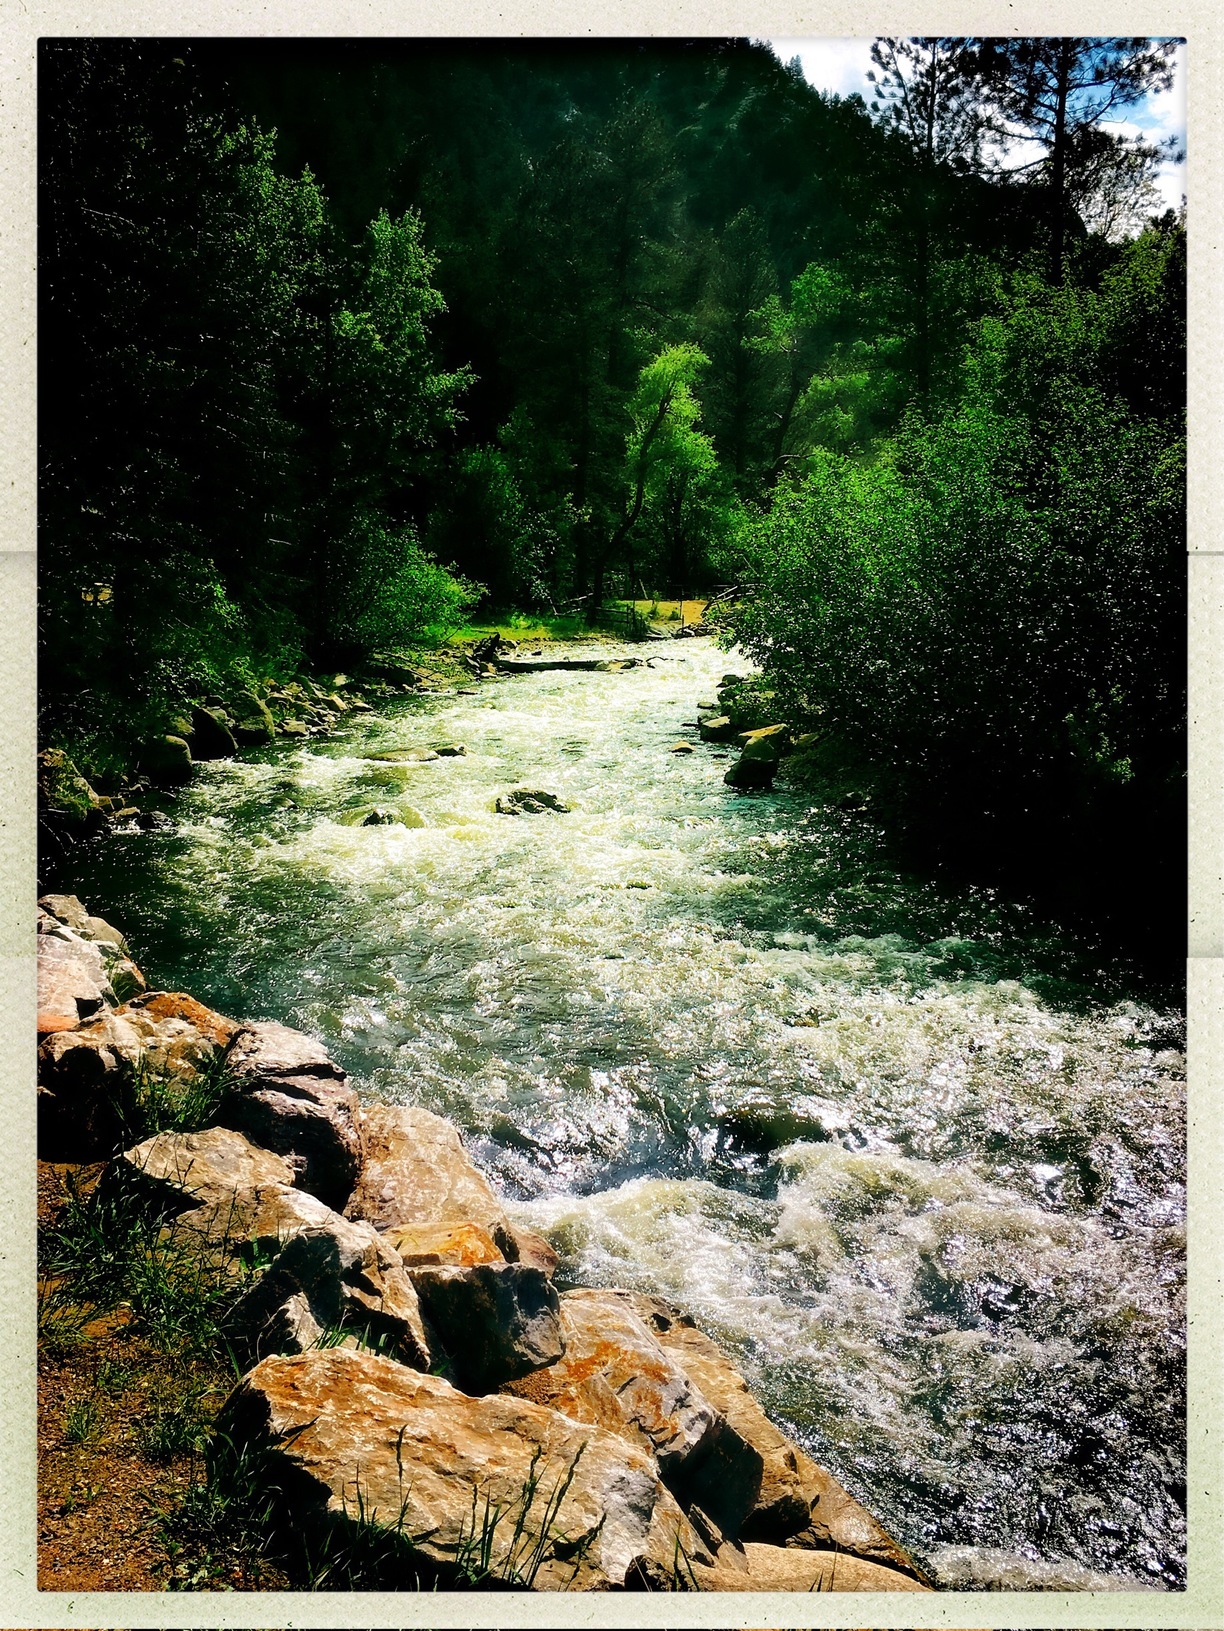 Eldorado Canyon State Park, Eldorado Springs, Colorado - This river...